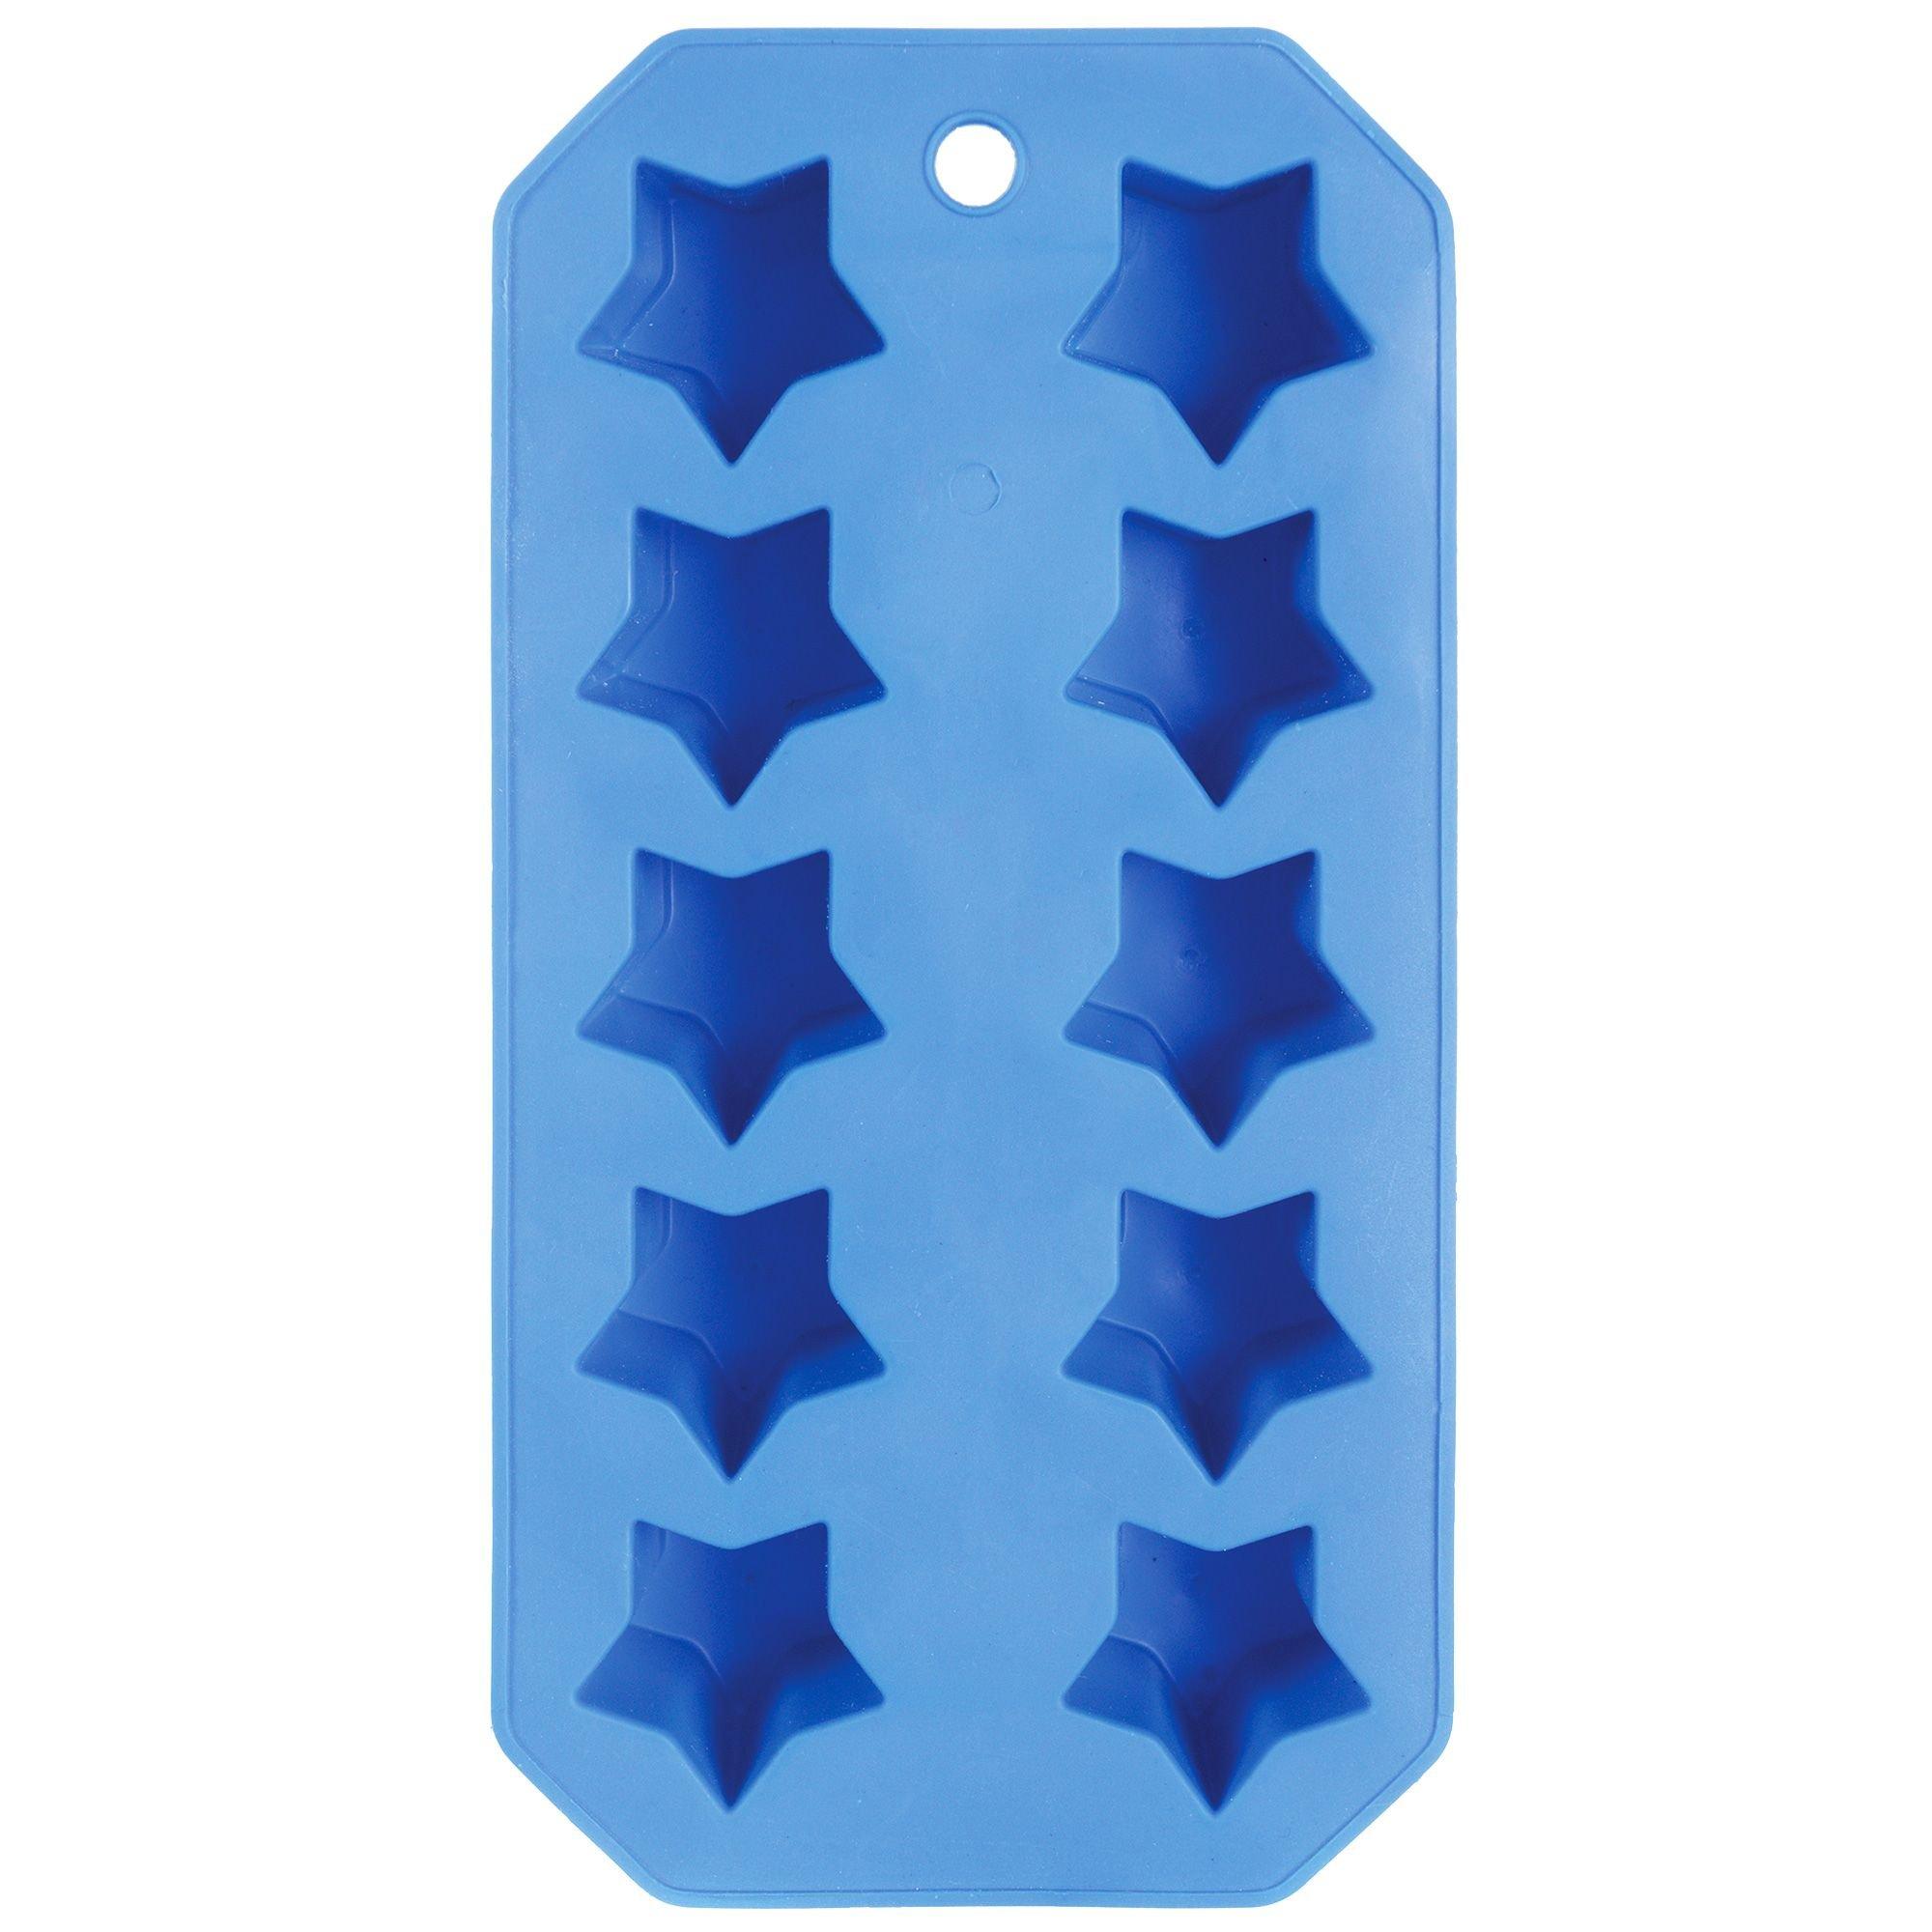 Blue Star Plastic Ice Tray, 10 Cavities